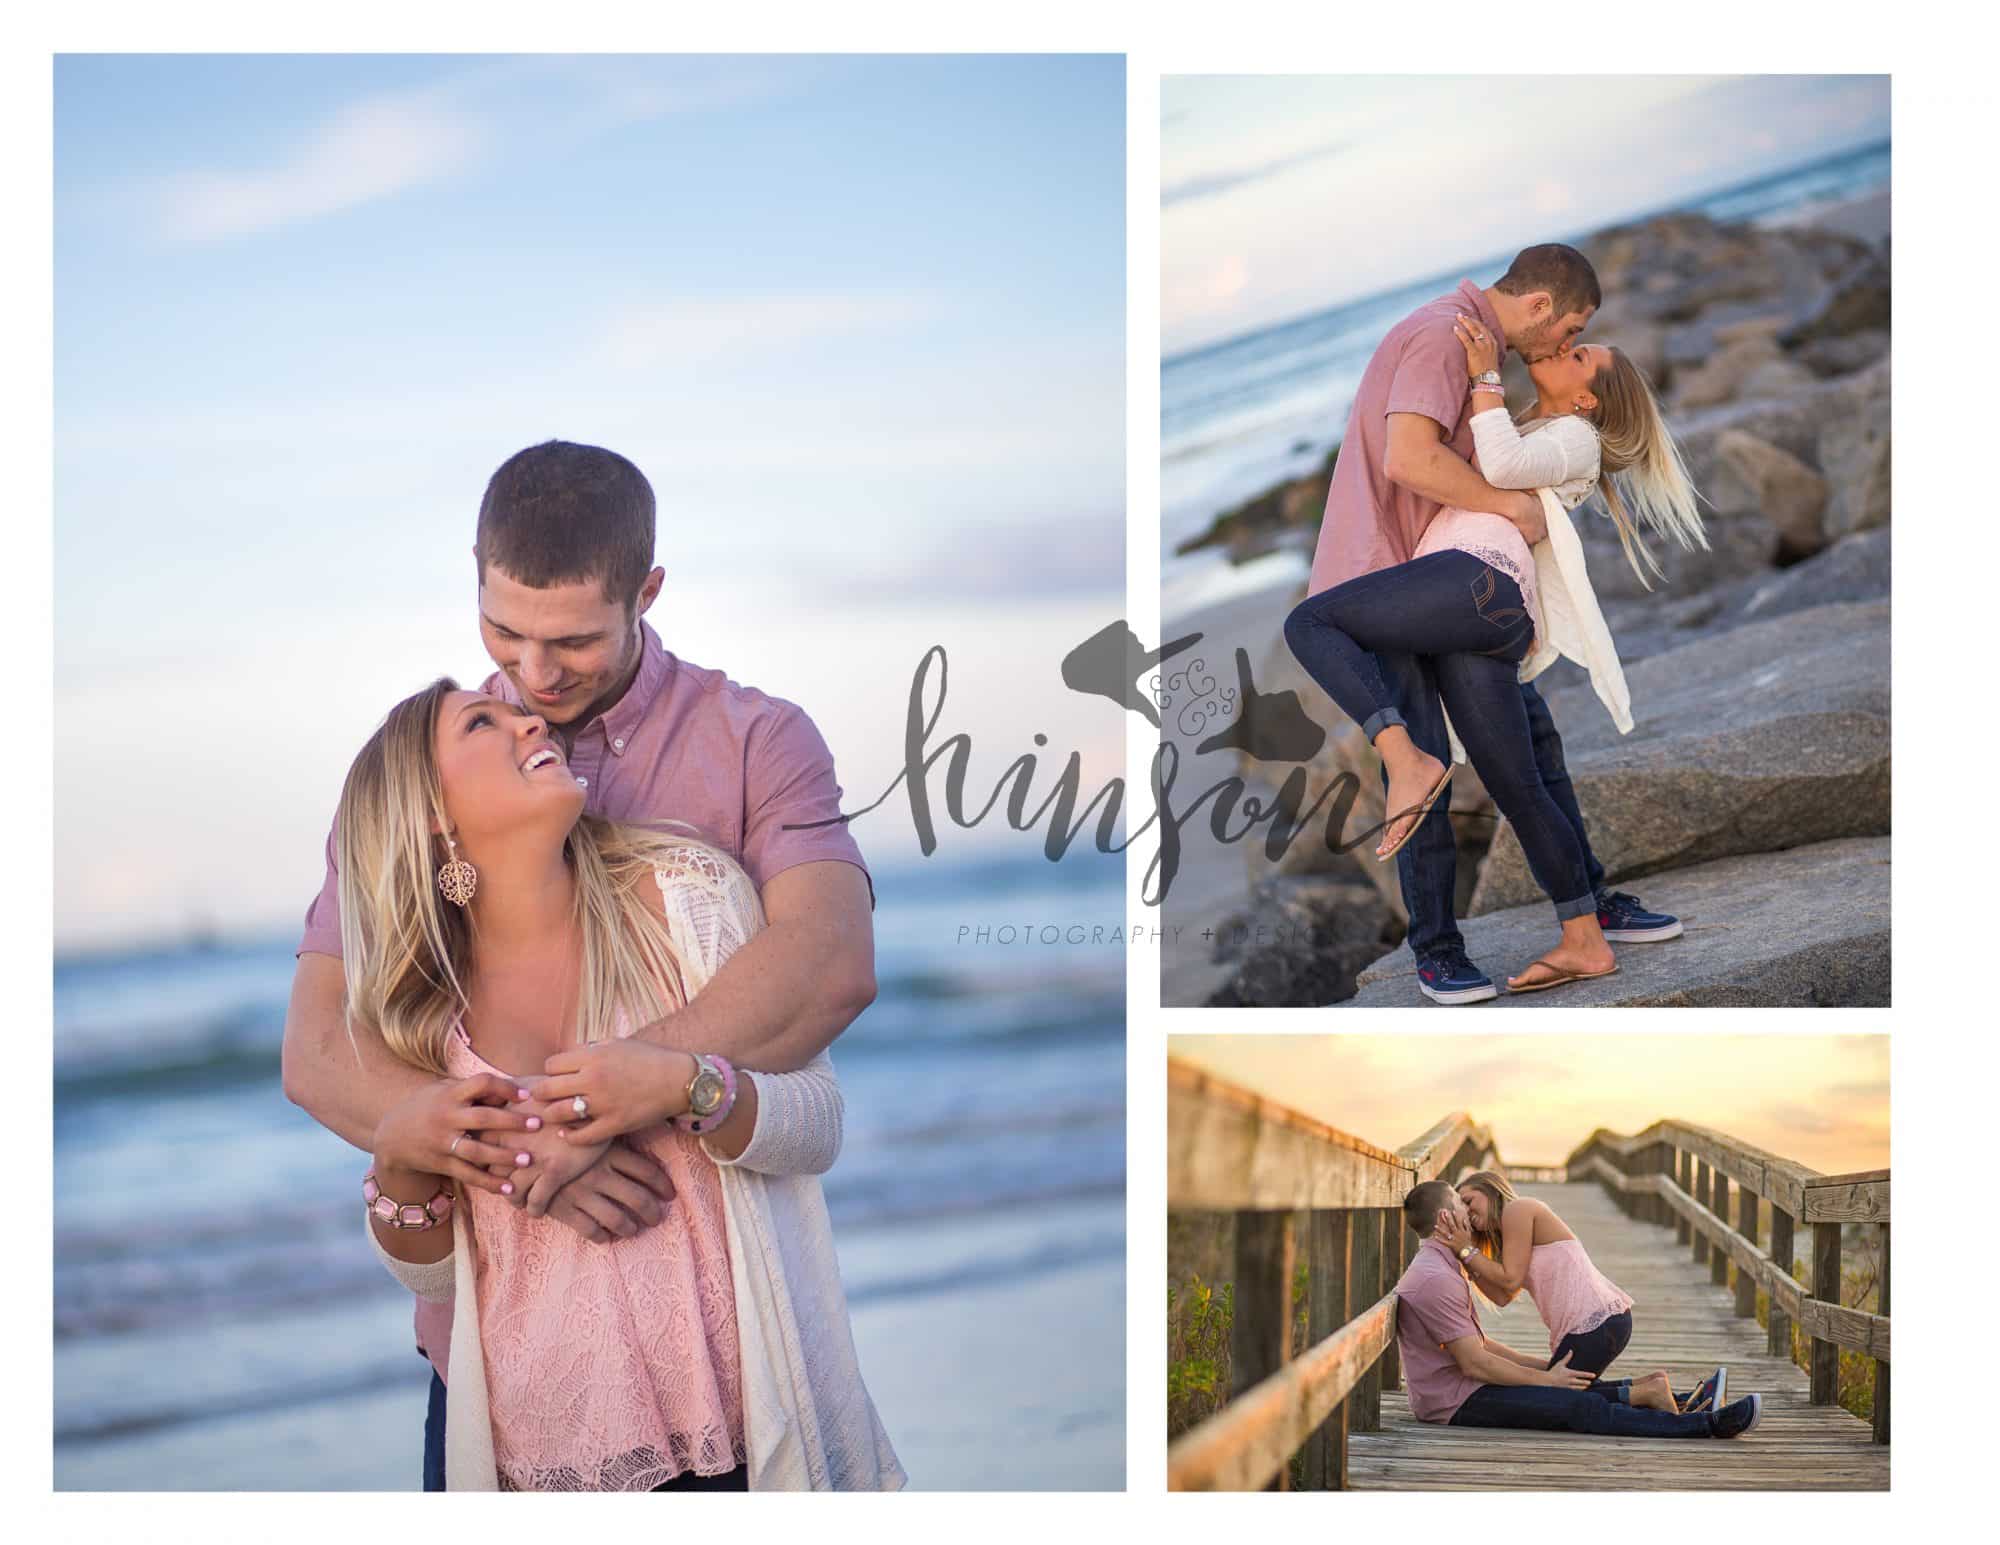 daytona beach photography session at Smyrna Dunes Park by daytona beach photographer, new smyrna beach marriage proposal